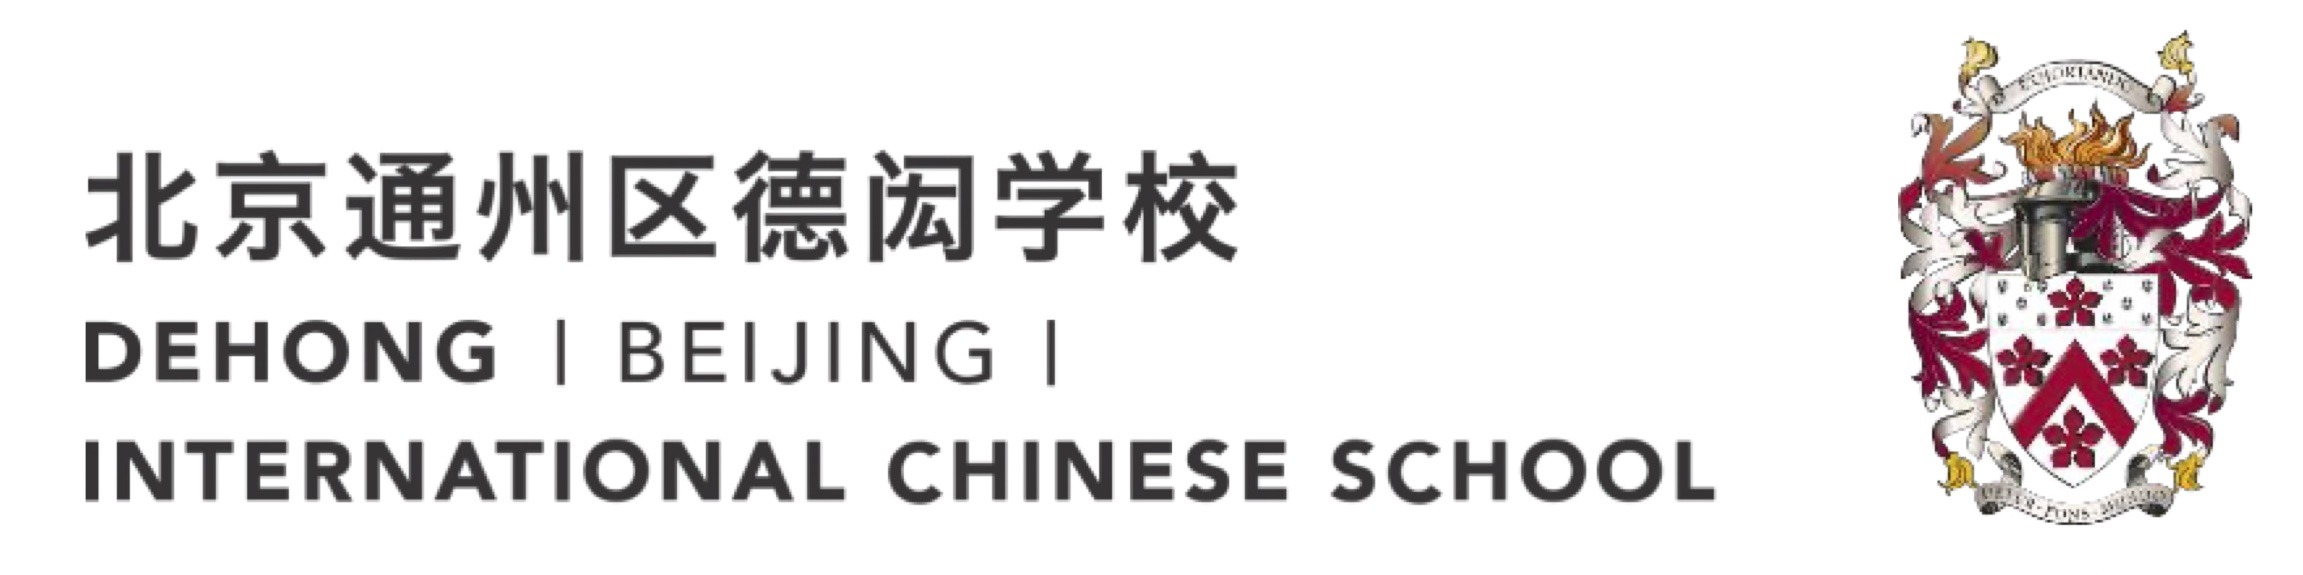 Dehong-international-chinese-school-logo